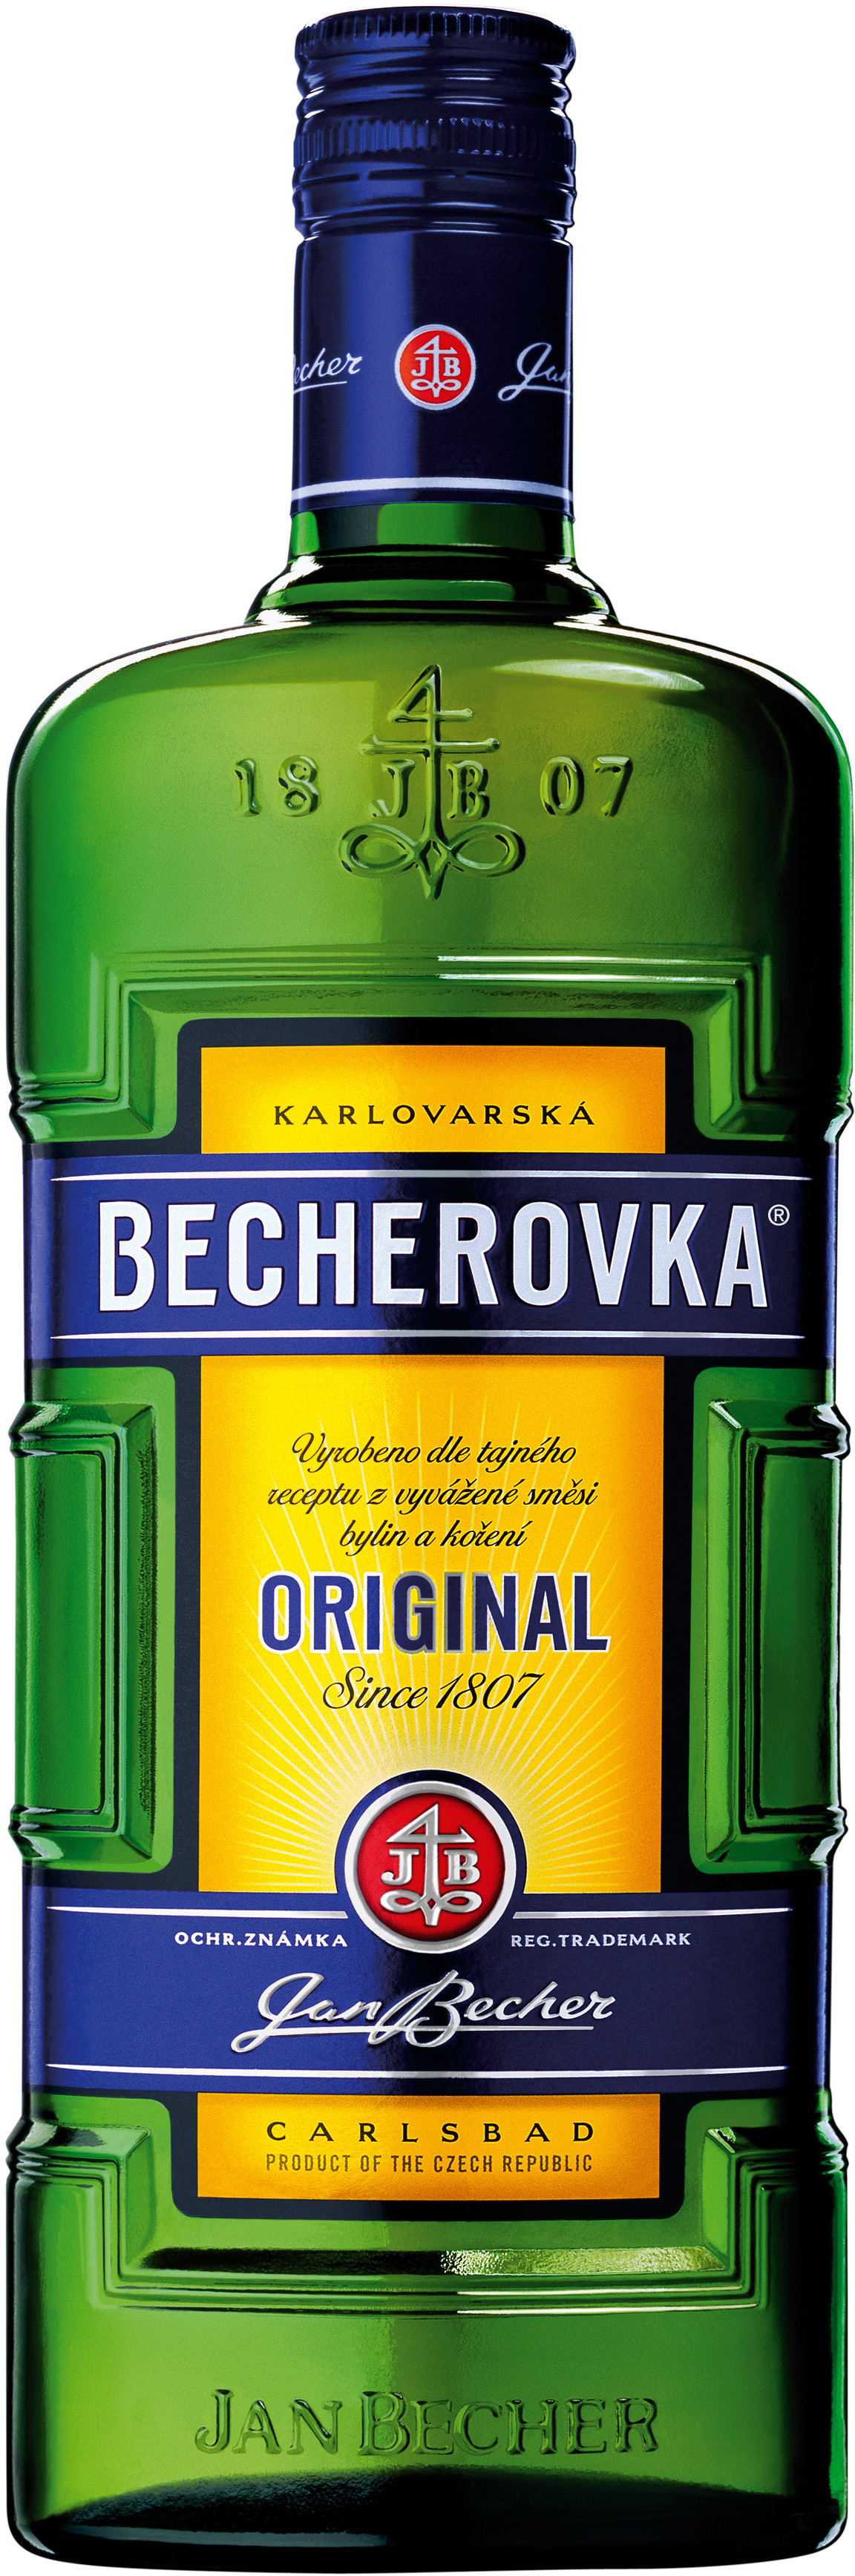 Becherovka Carlsbad 38% bordershop at Chop in 0.5L duty-free Tysa